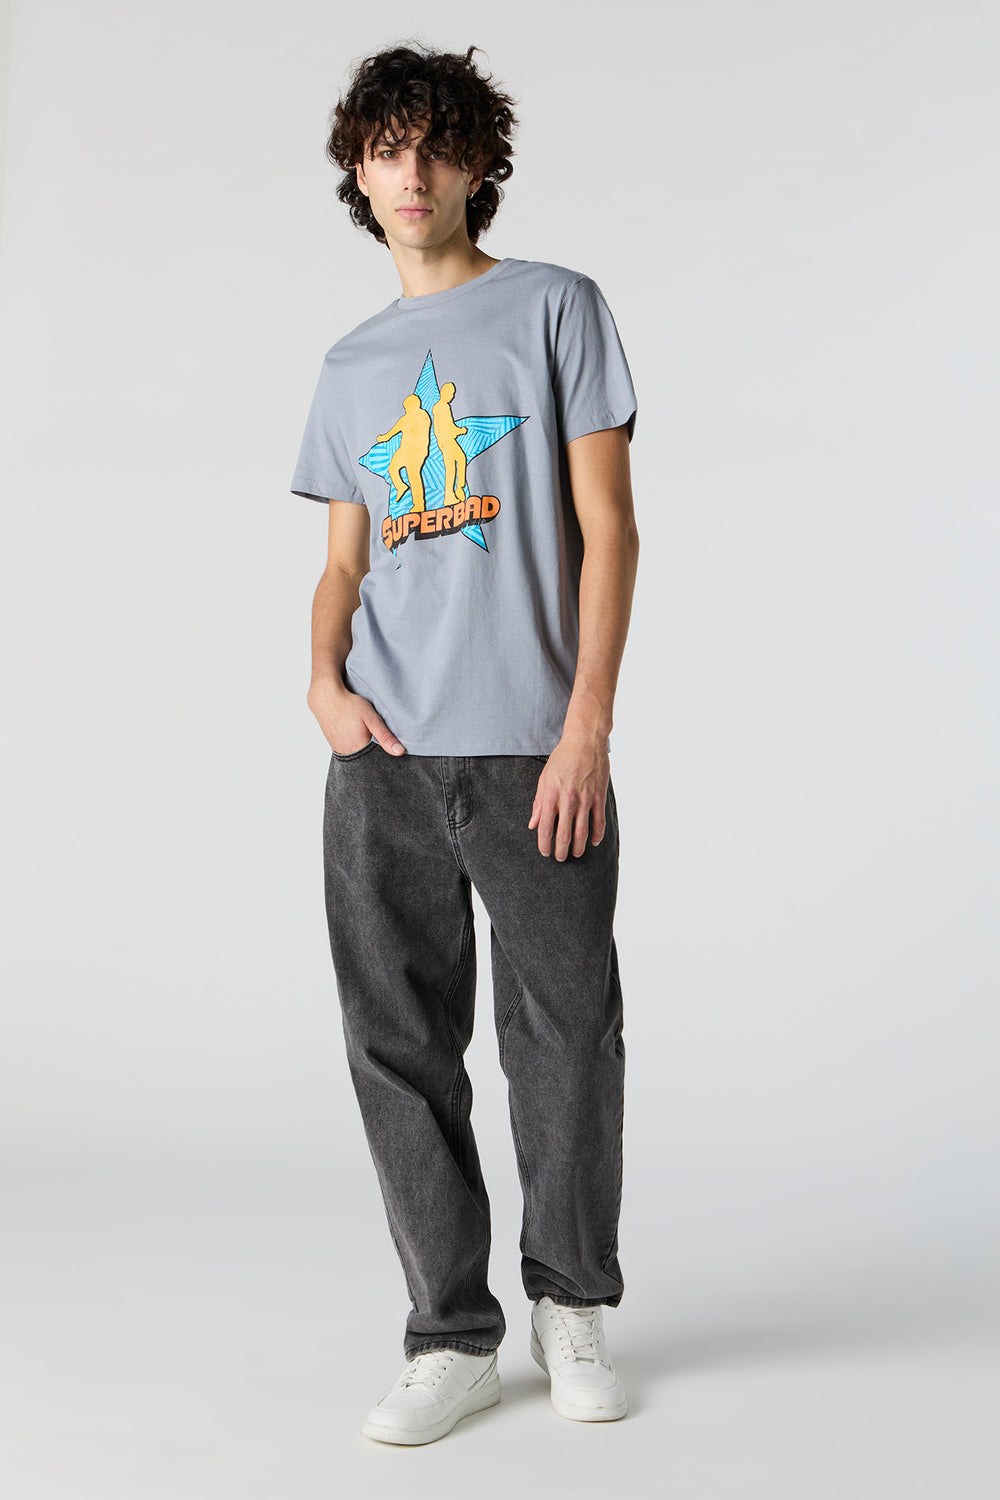 Superbad Graphic T-Shirt Superbad Graphic T-Shirt 3